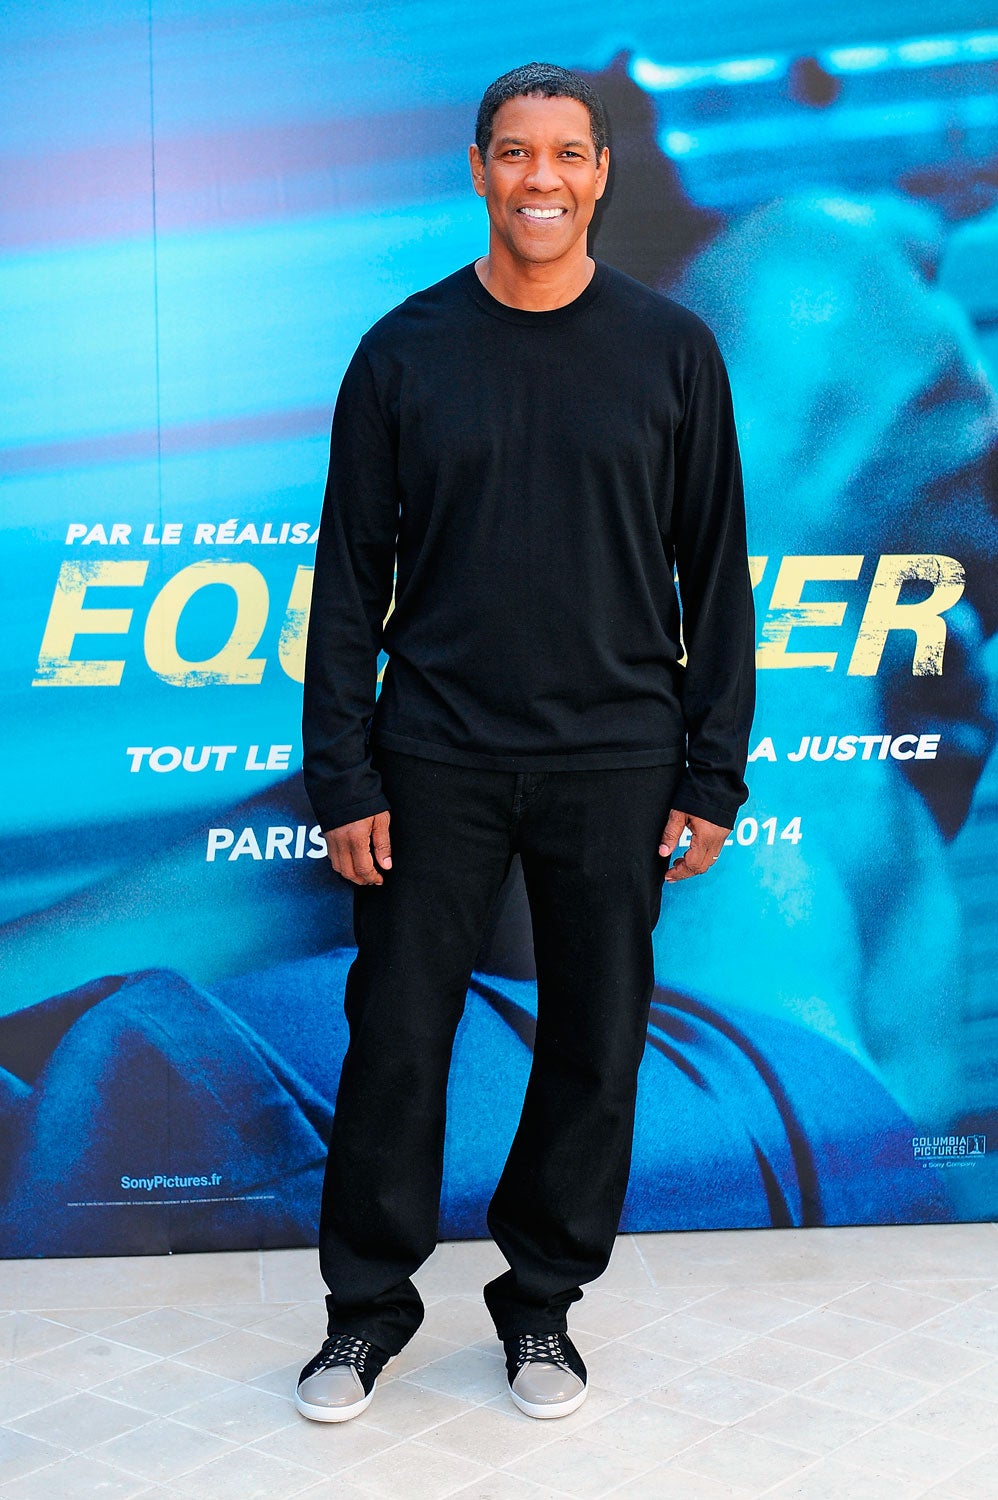 Denzel Washington's 'Equalizer' Earns $35 Million at the Box Office
